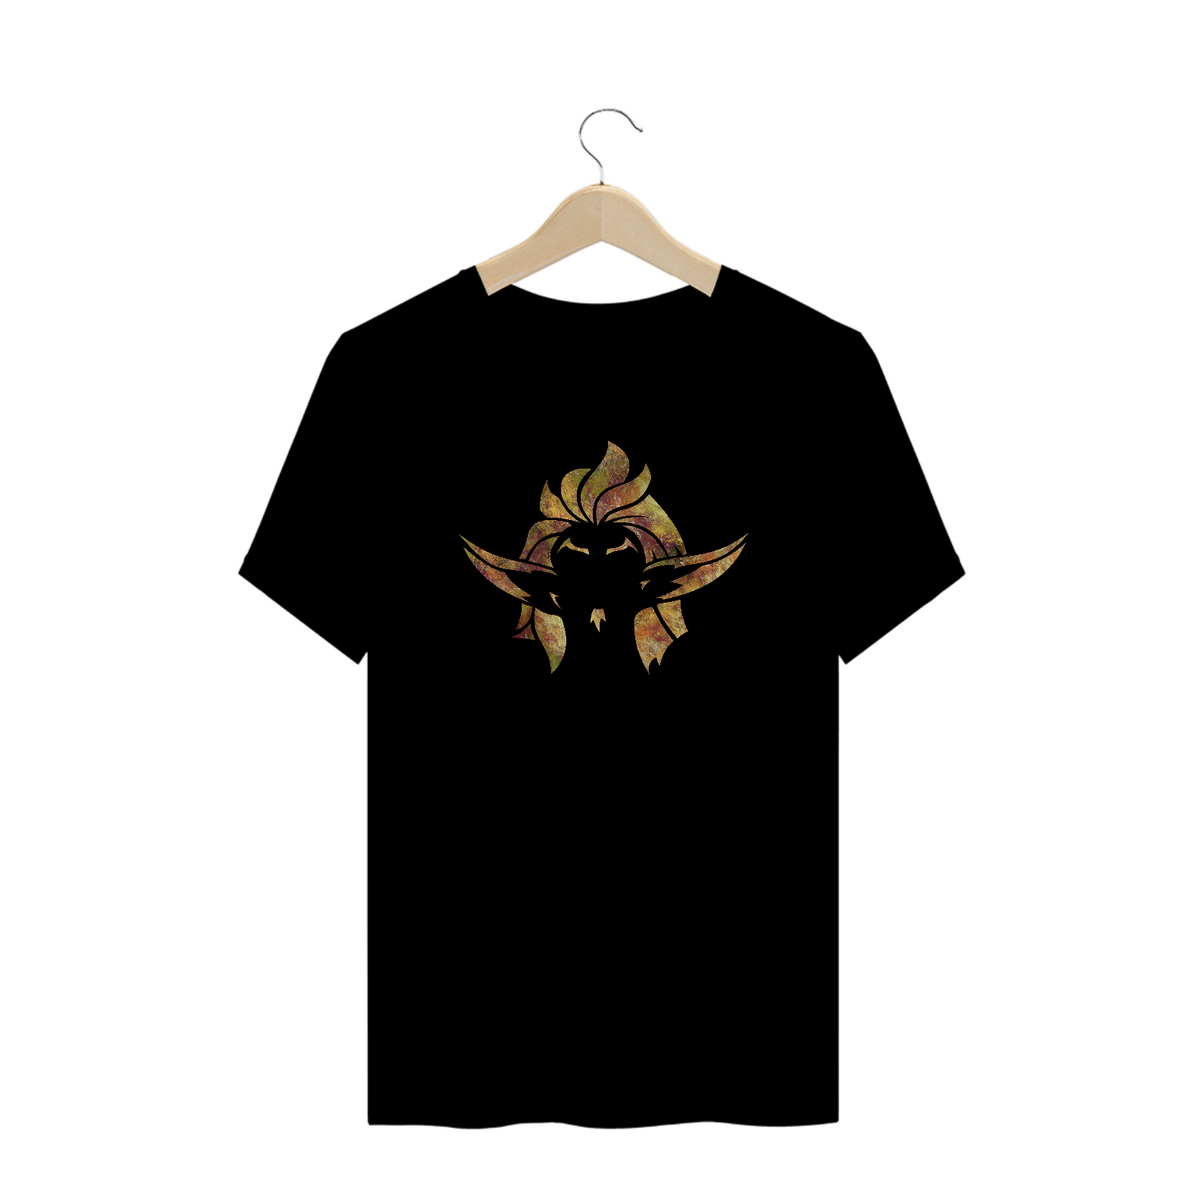 Nome do produto: T-Shirt Rakan (LEAGUE OF LEGENDS)